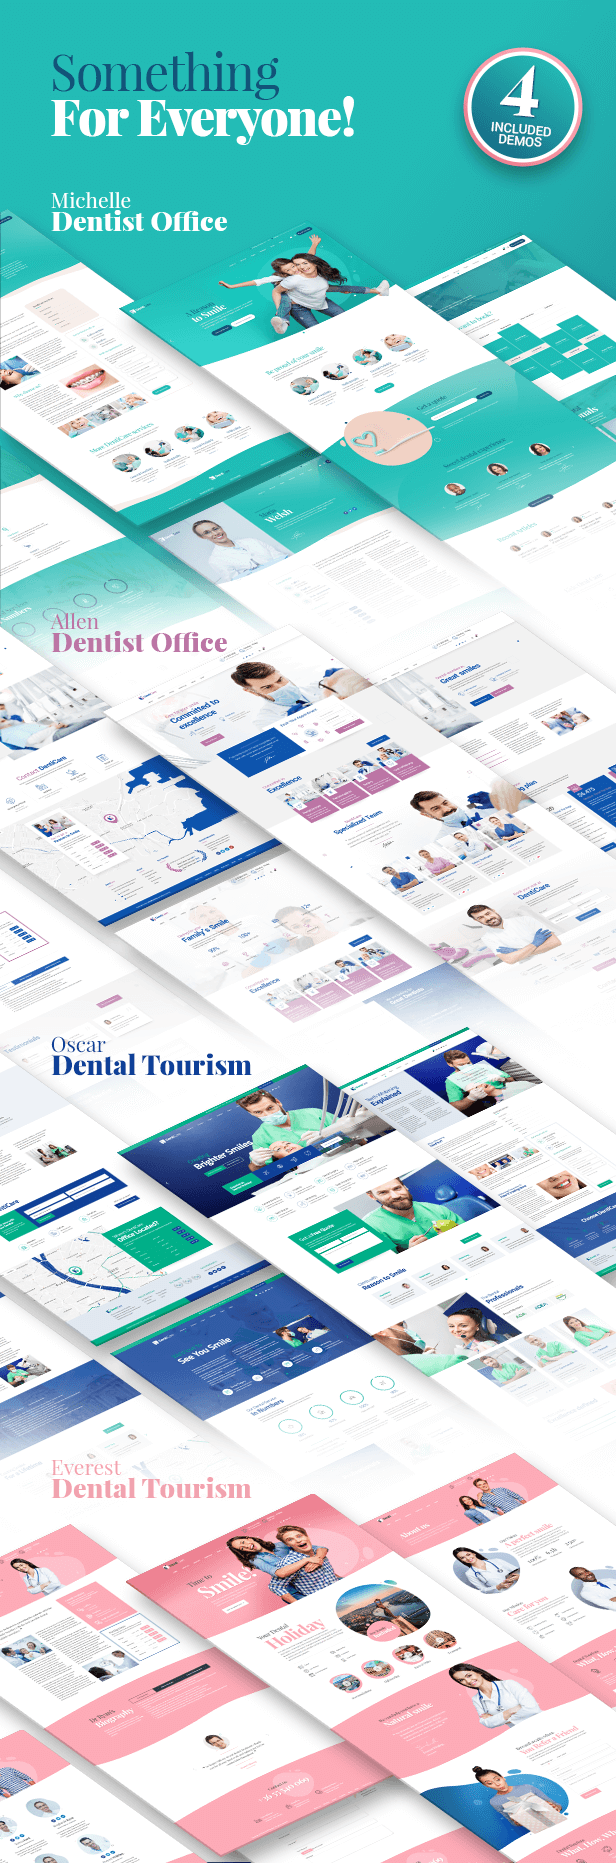 DentiCare Medical Dental Clinic